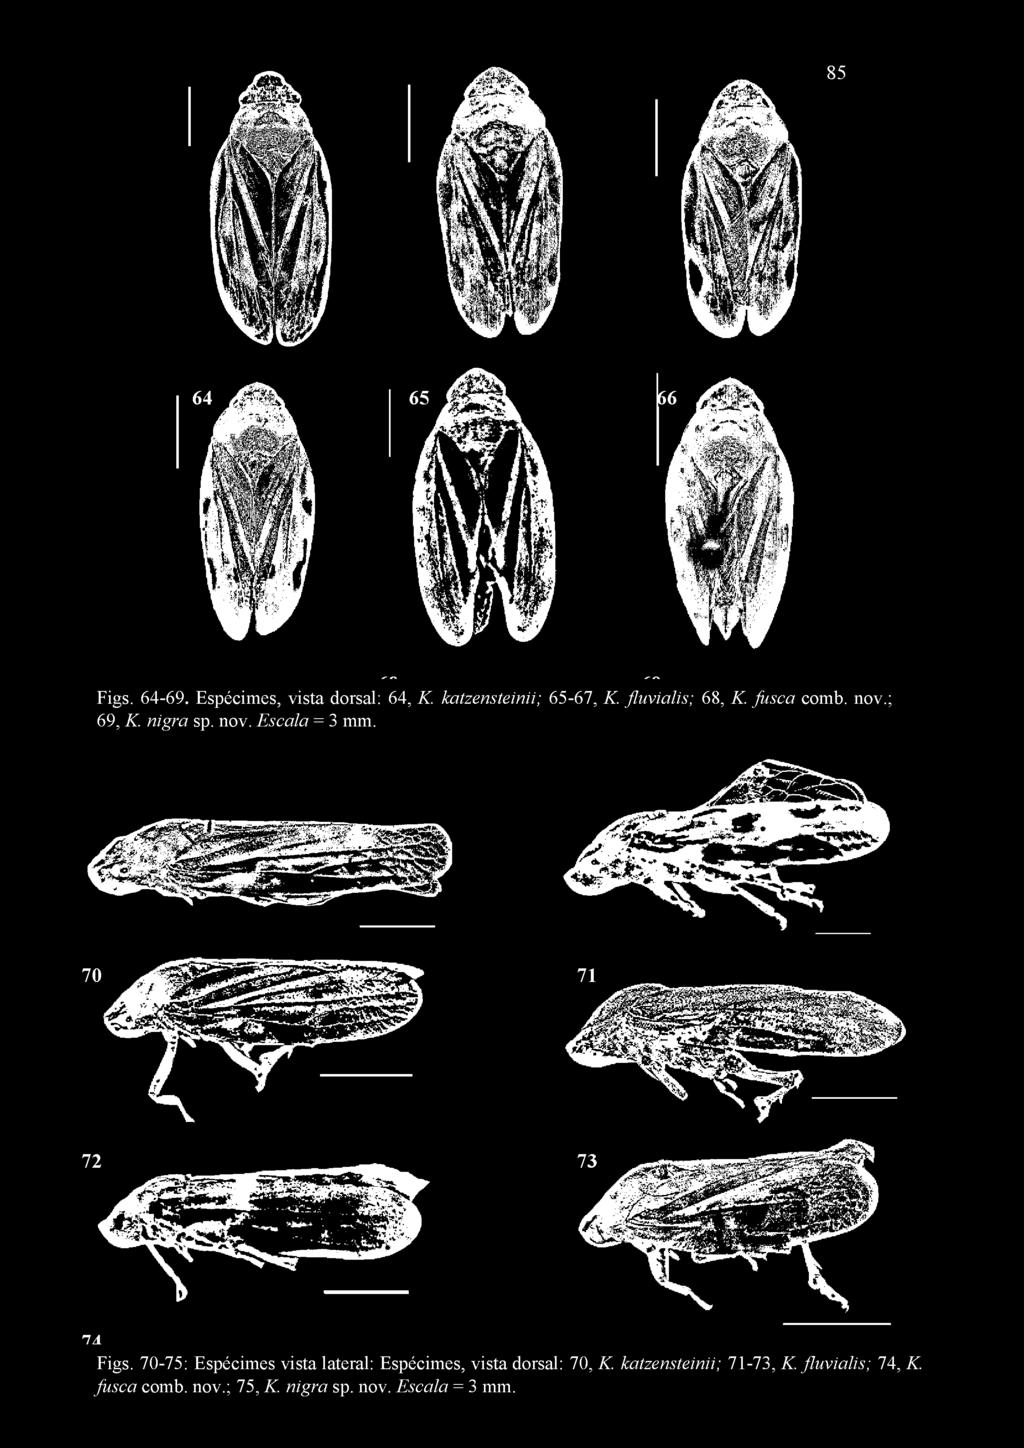 70-75: Espécimes vista lateral: Espécimes, vista